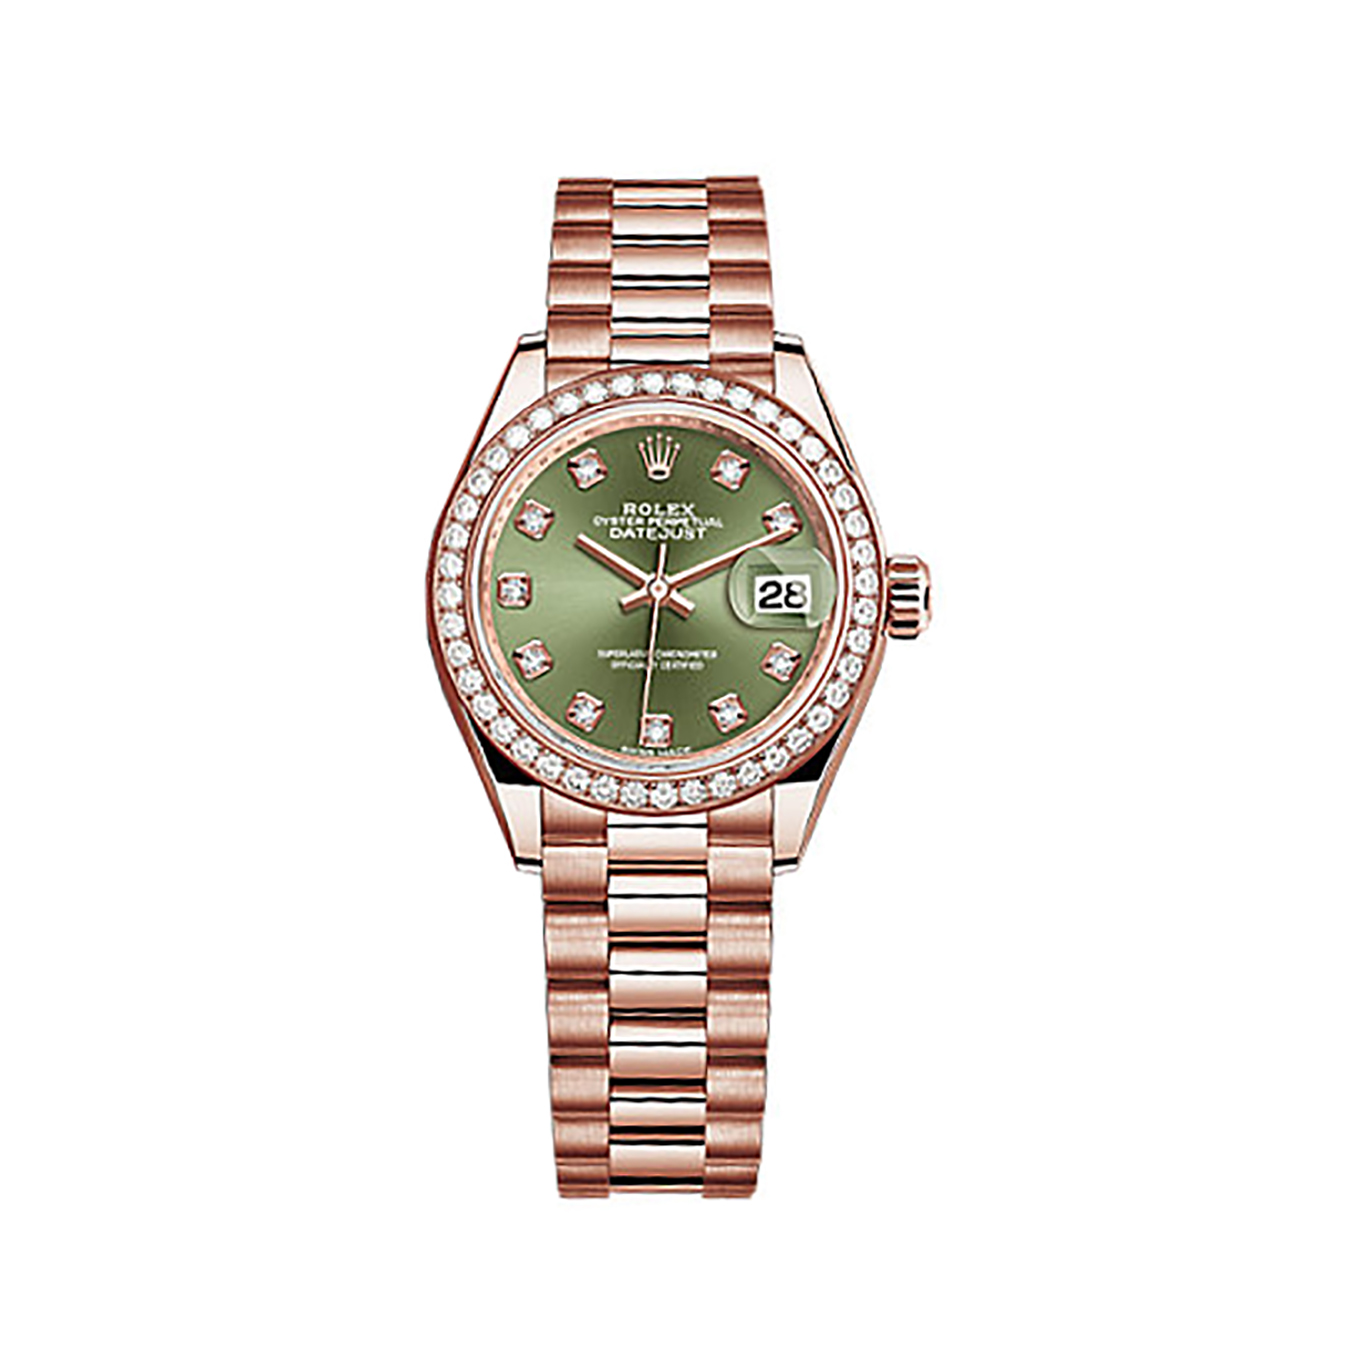 Lady-Datejust 28 279135RBR Rose Gold & Diamonds Watch (Olive Green Set with Diamonds)